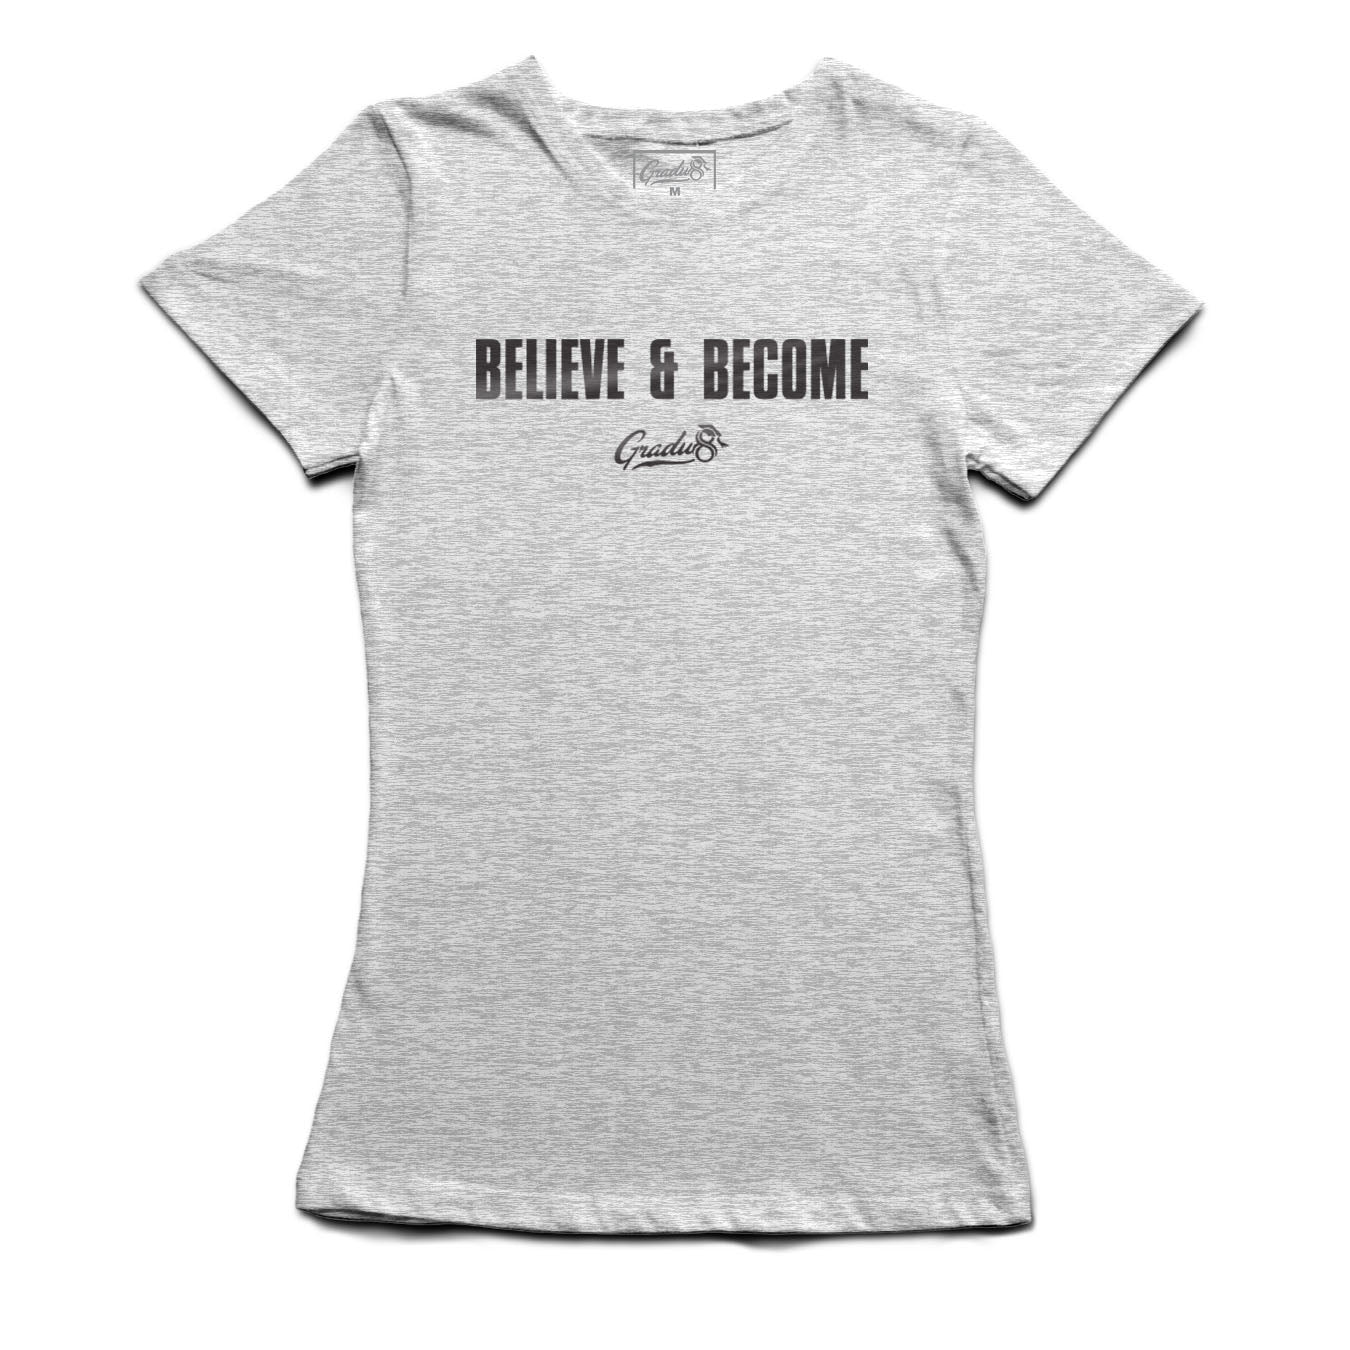 Women's Original Believe & Become T-shirt - Heather grey